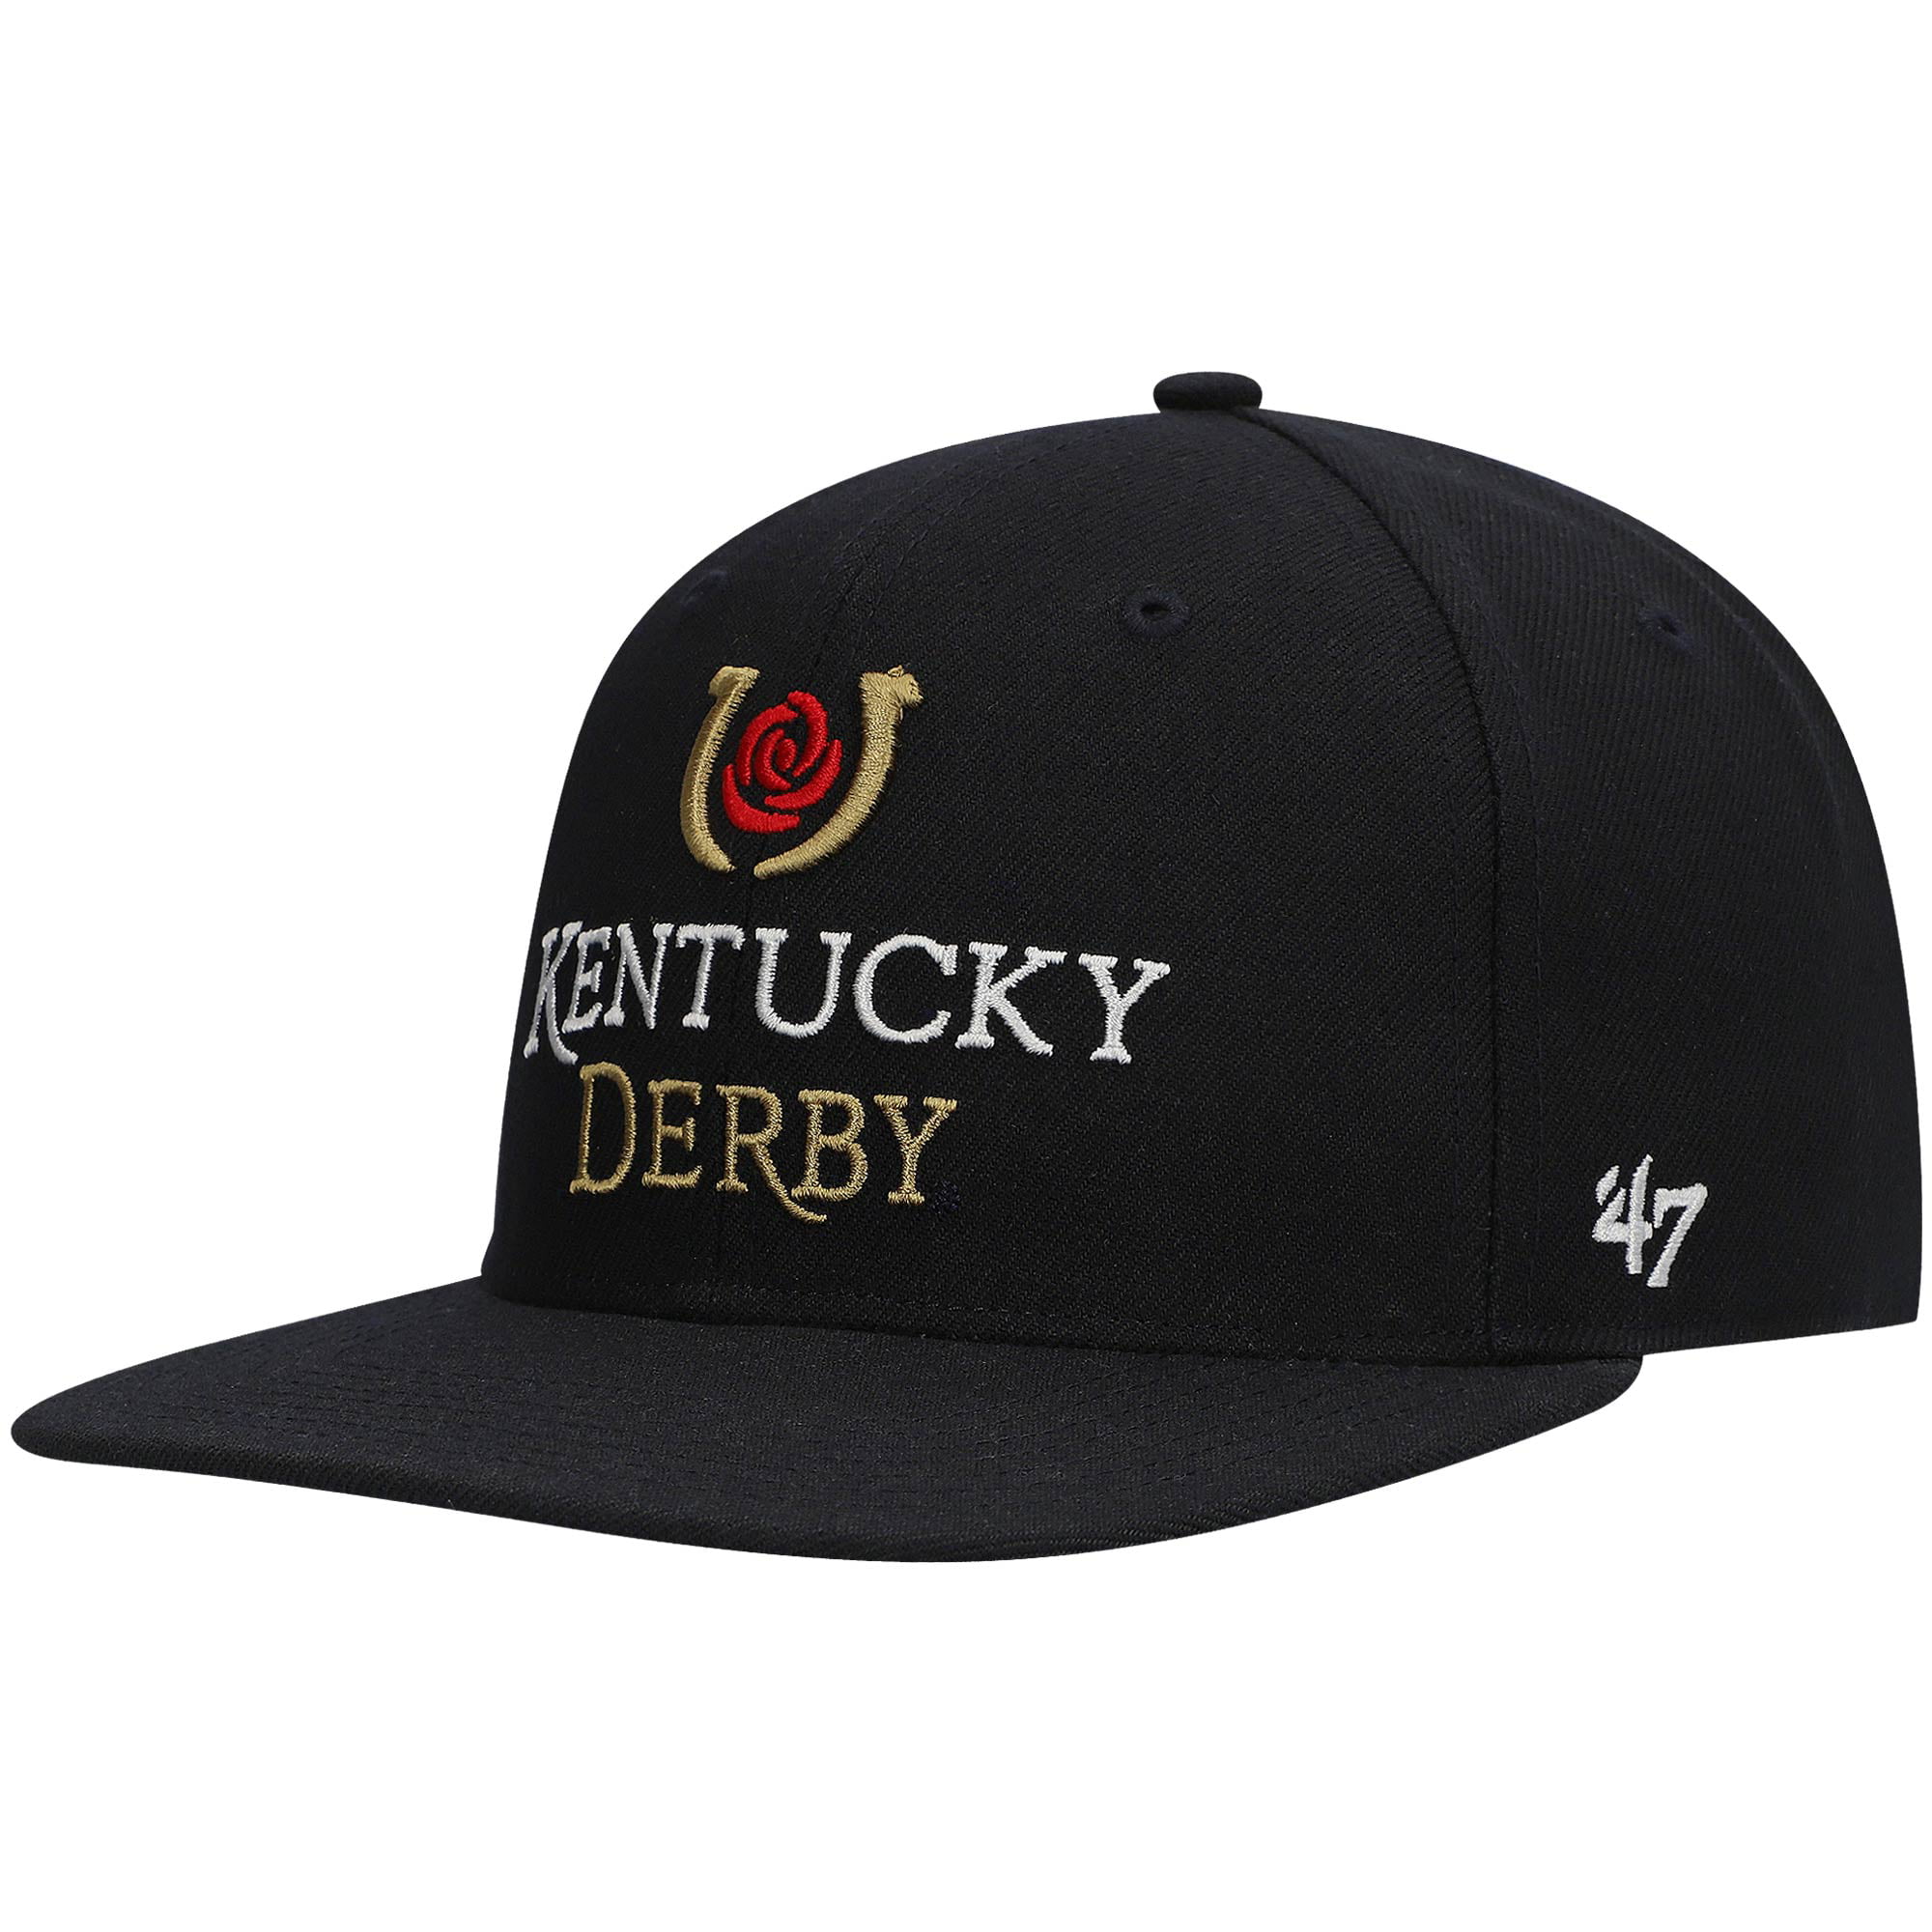 ’47 - Kentucky Derby '47 Snapback Hat - Navy - Walmart.com - Walmart.com